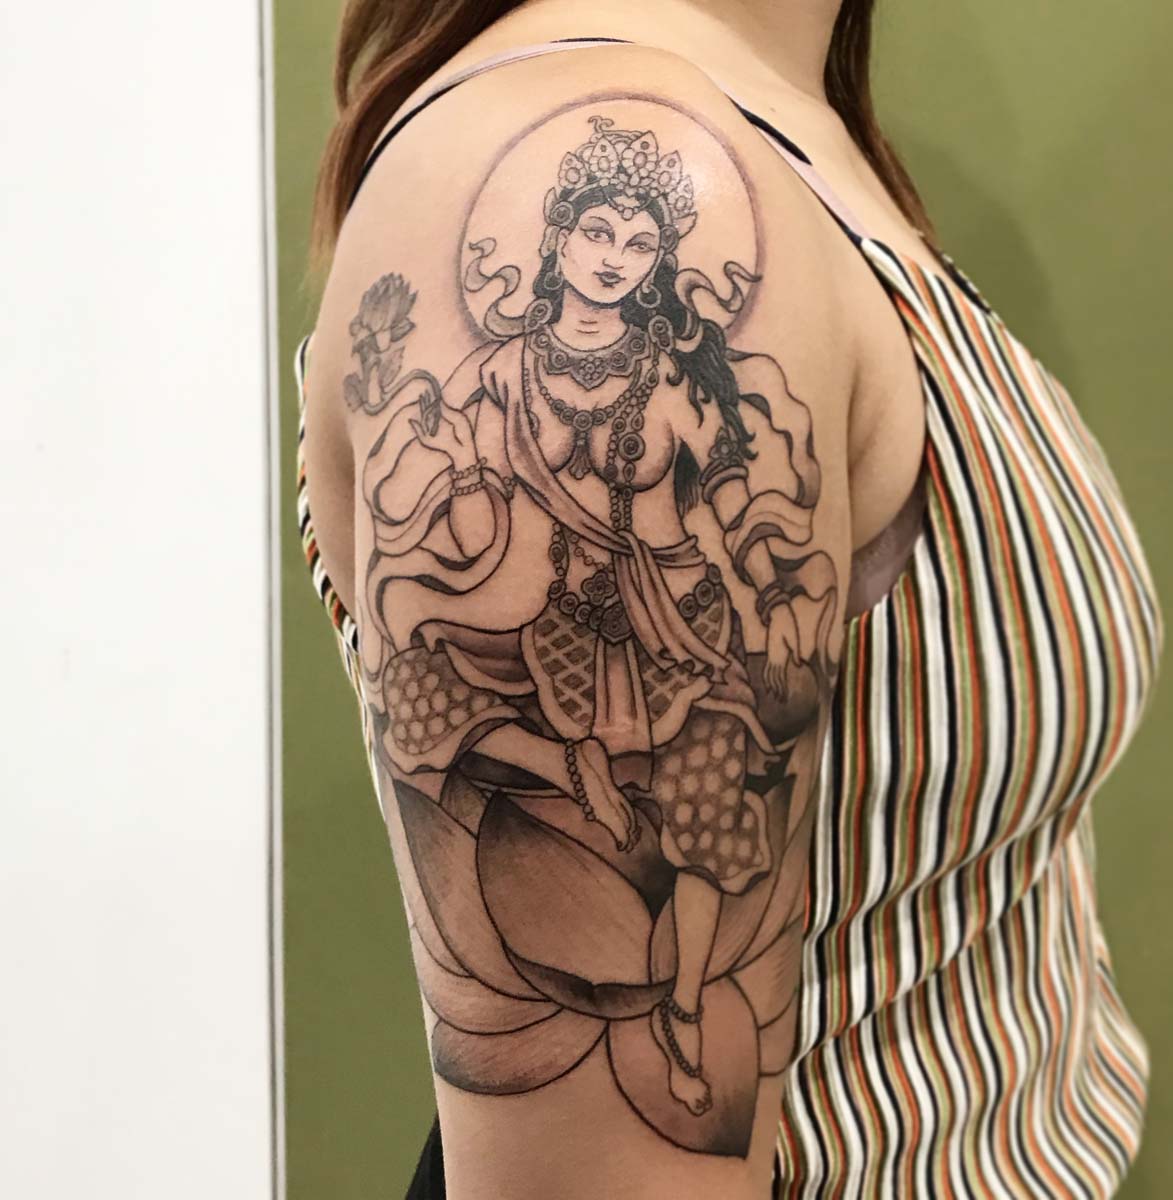 My Lakshmi Tattoo by MYchelle319 on DeviantArt